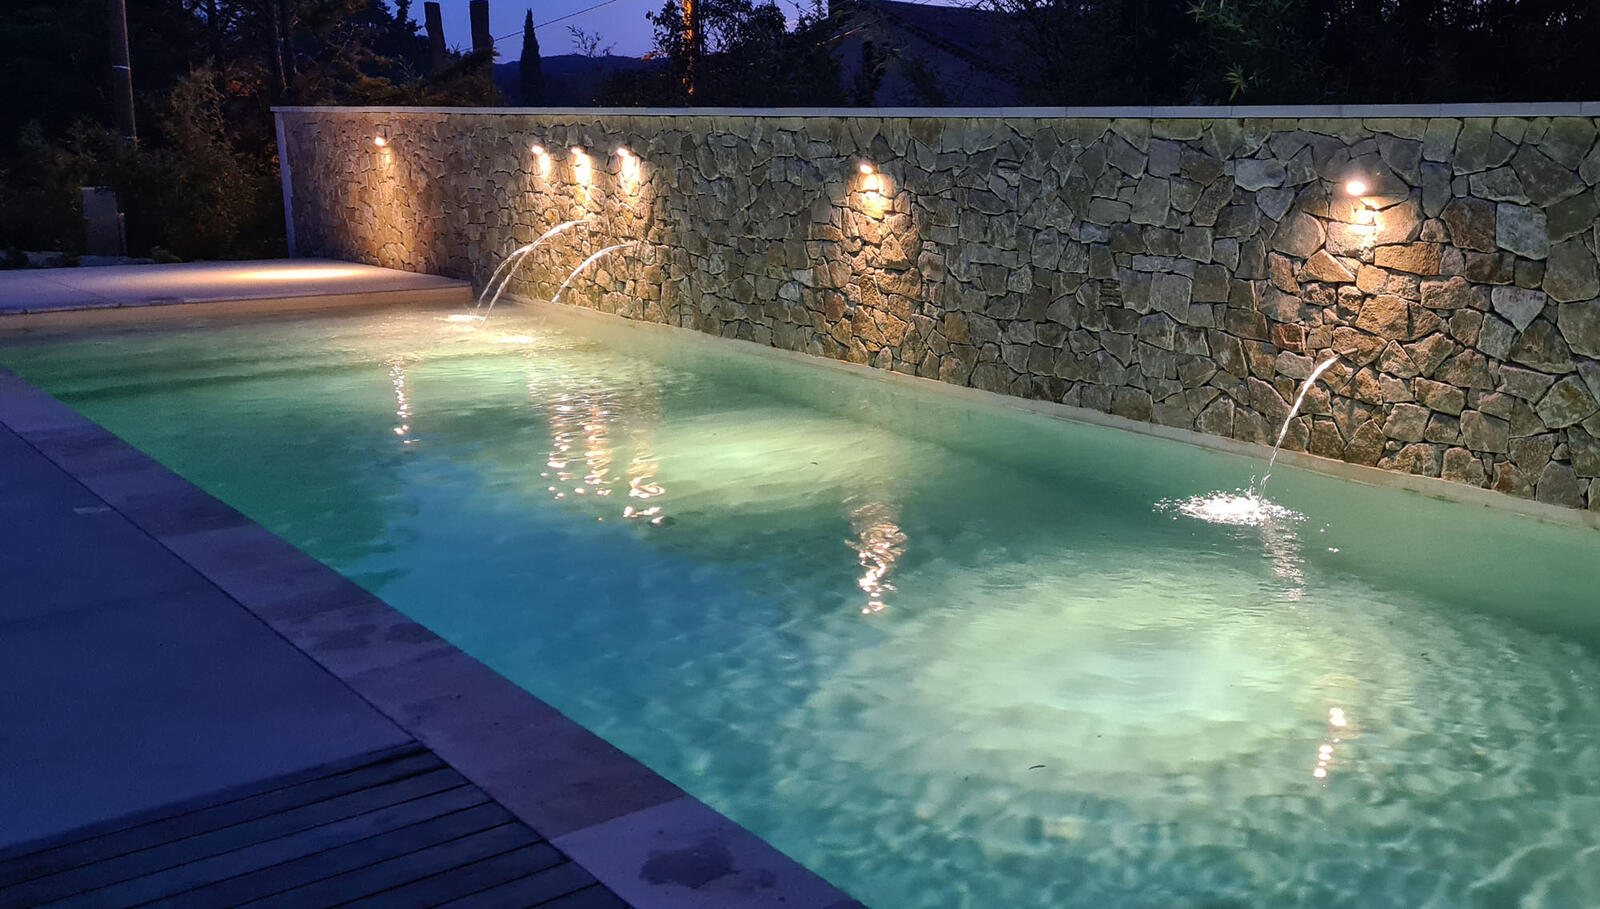 Pool with lights